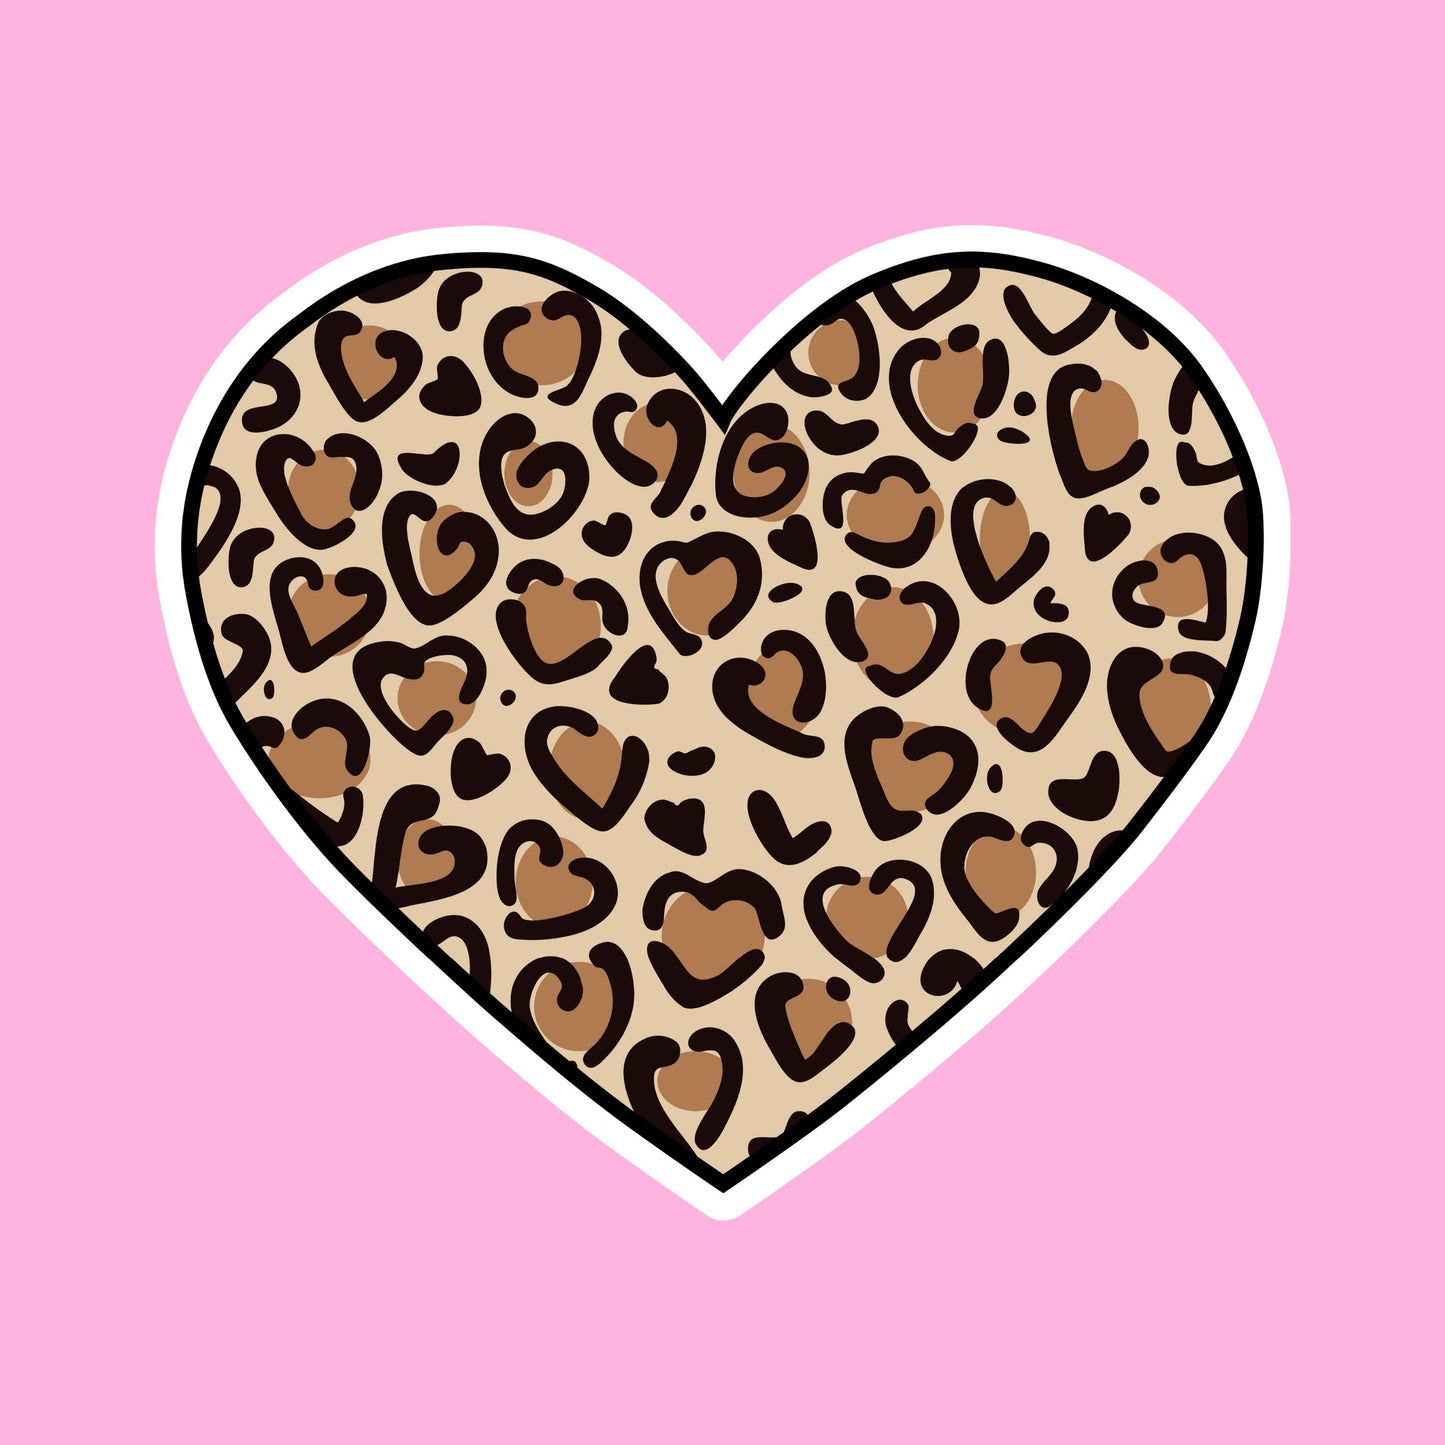 V-day STICKERS -  leopard heart- Glossy Vinyl Sticker Water Bottle Sticker Laptop Sticker